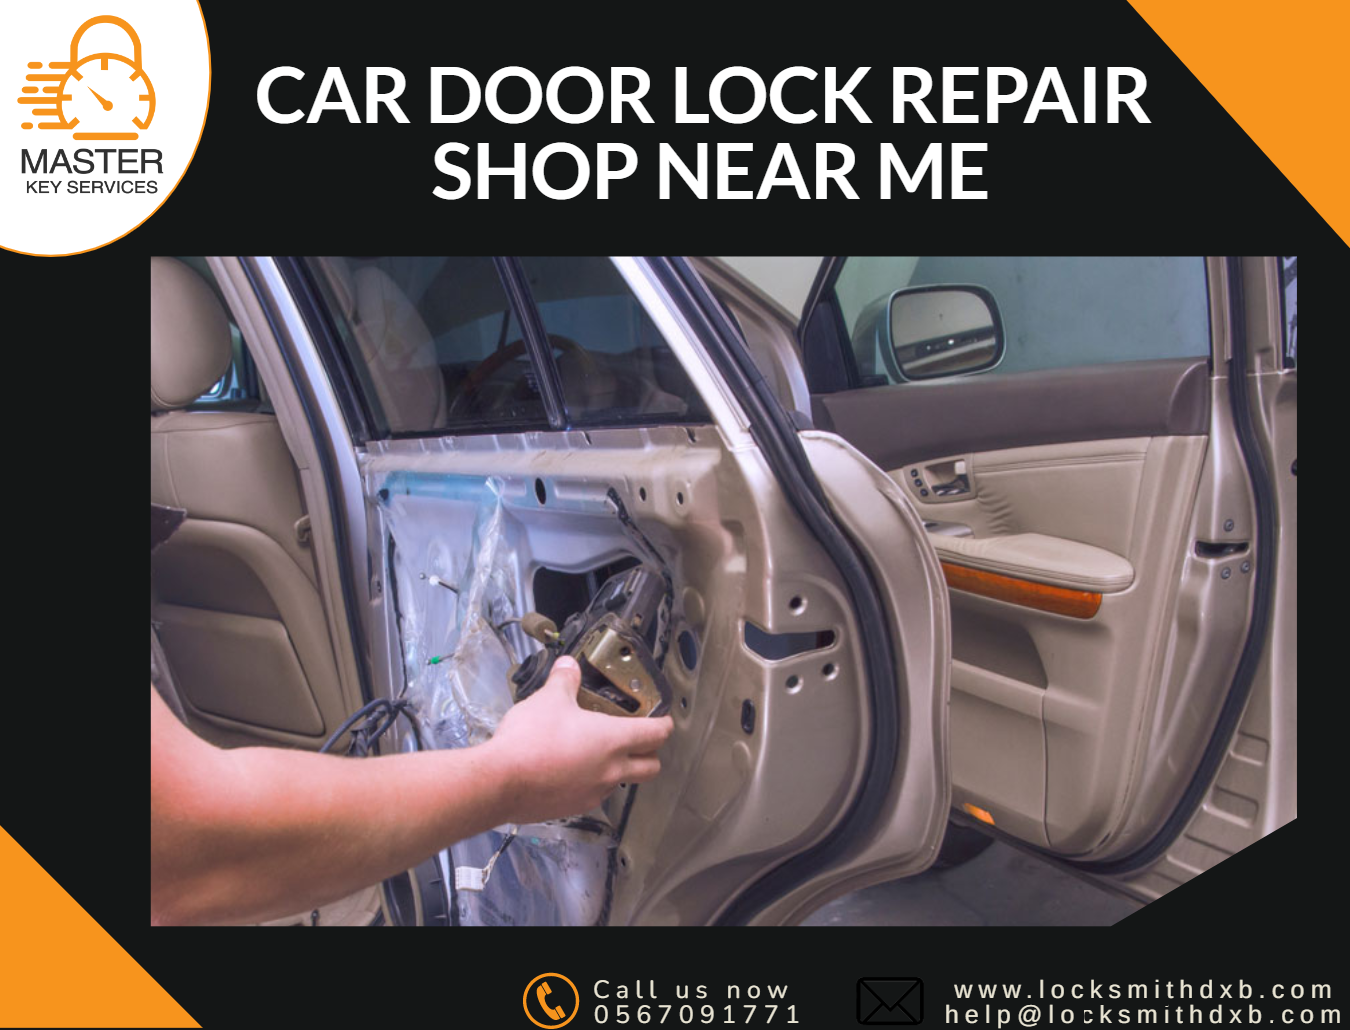 Car door lock repair